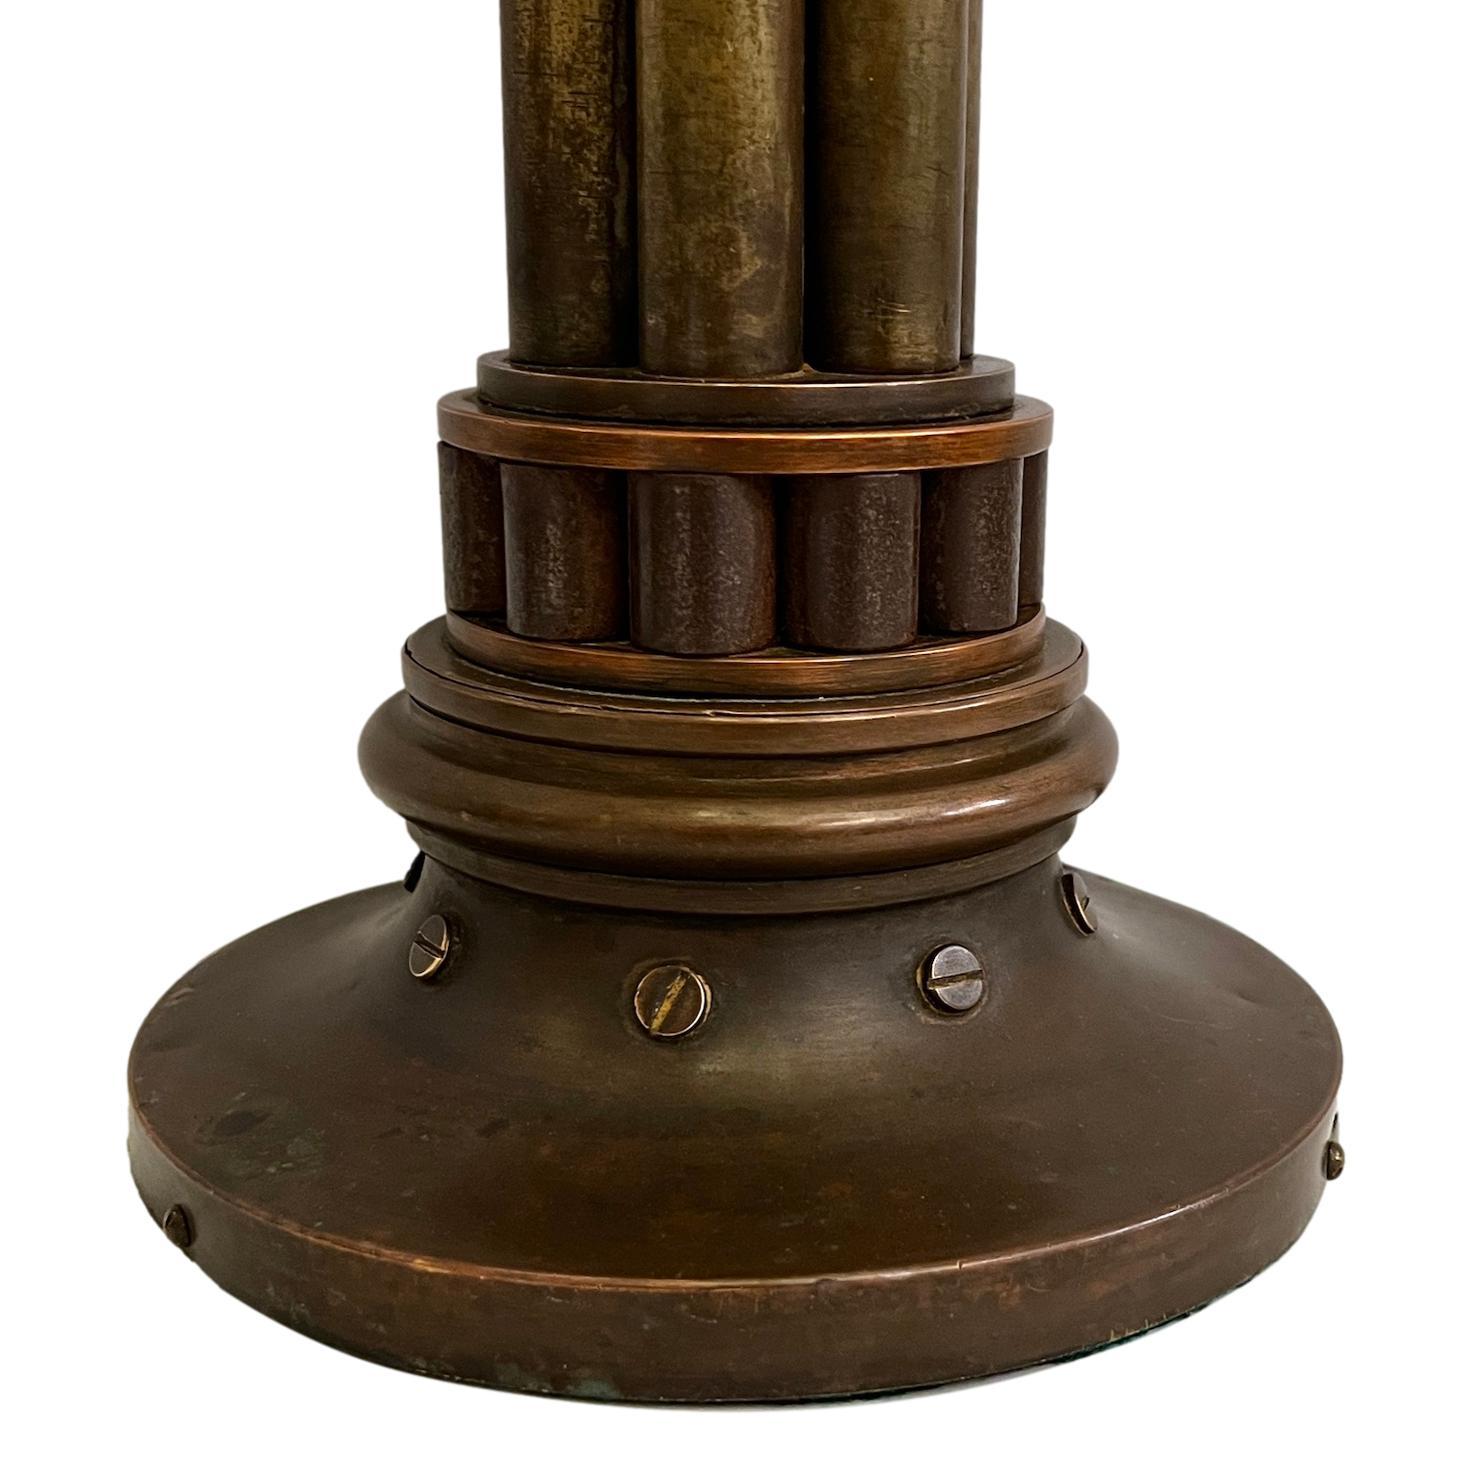 A circa 1940s English bronze artillery lamp with original patina.

Measurements:
Height of body: 18